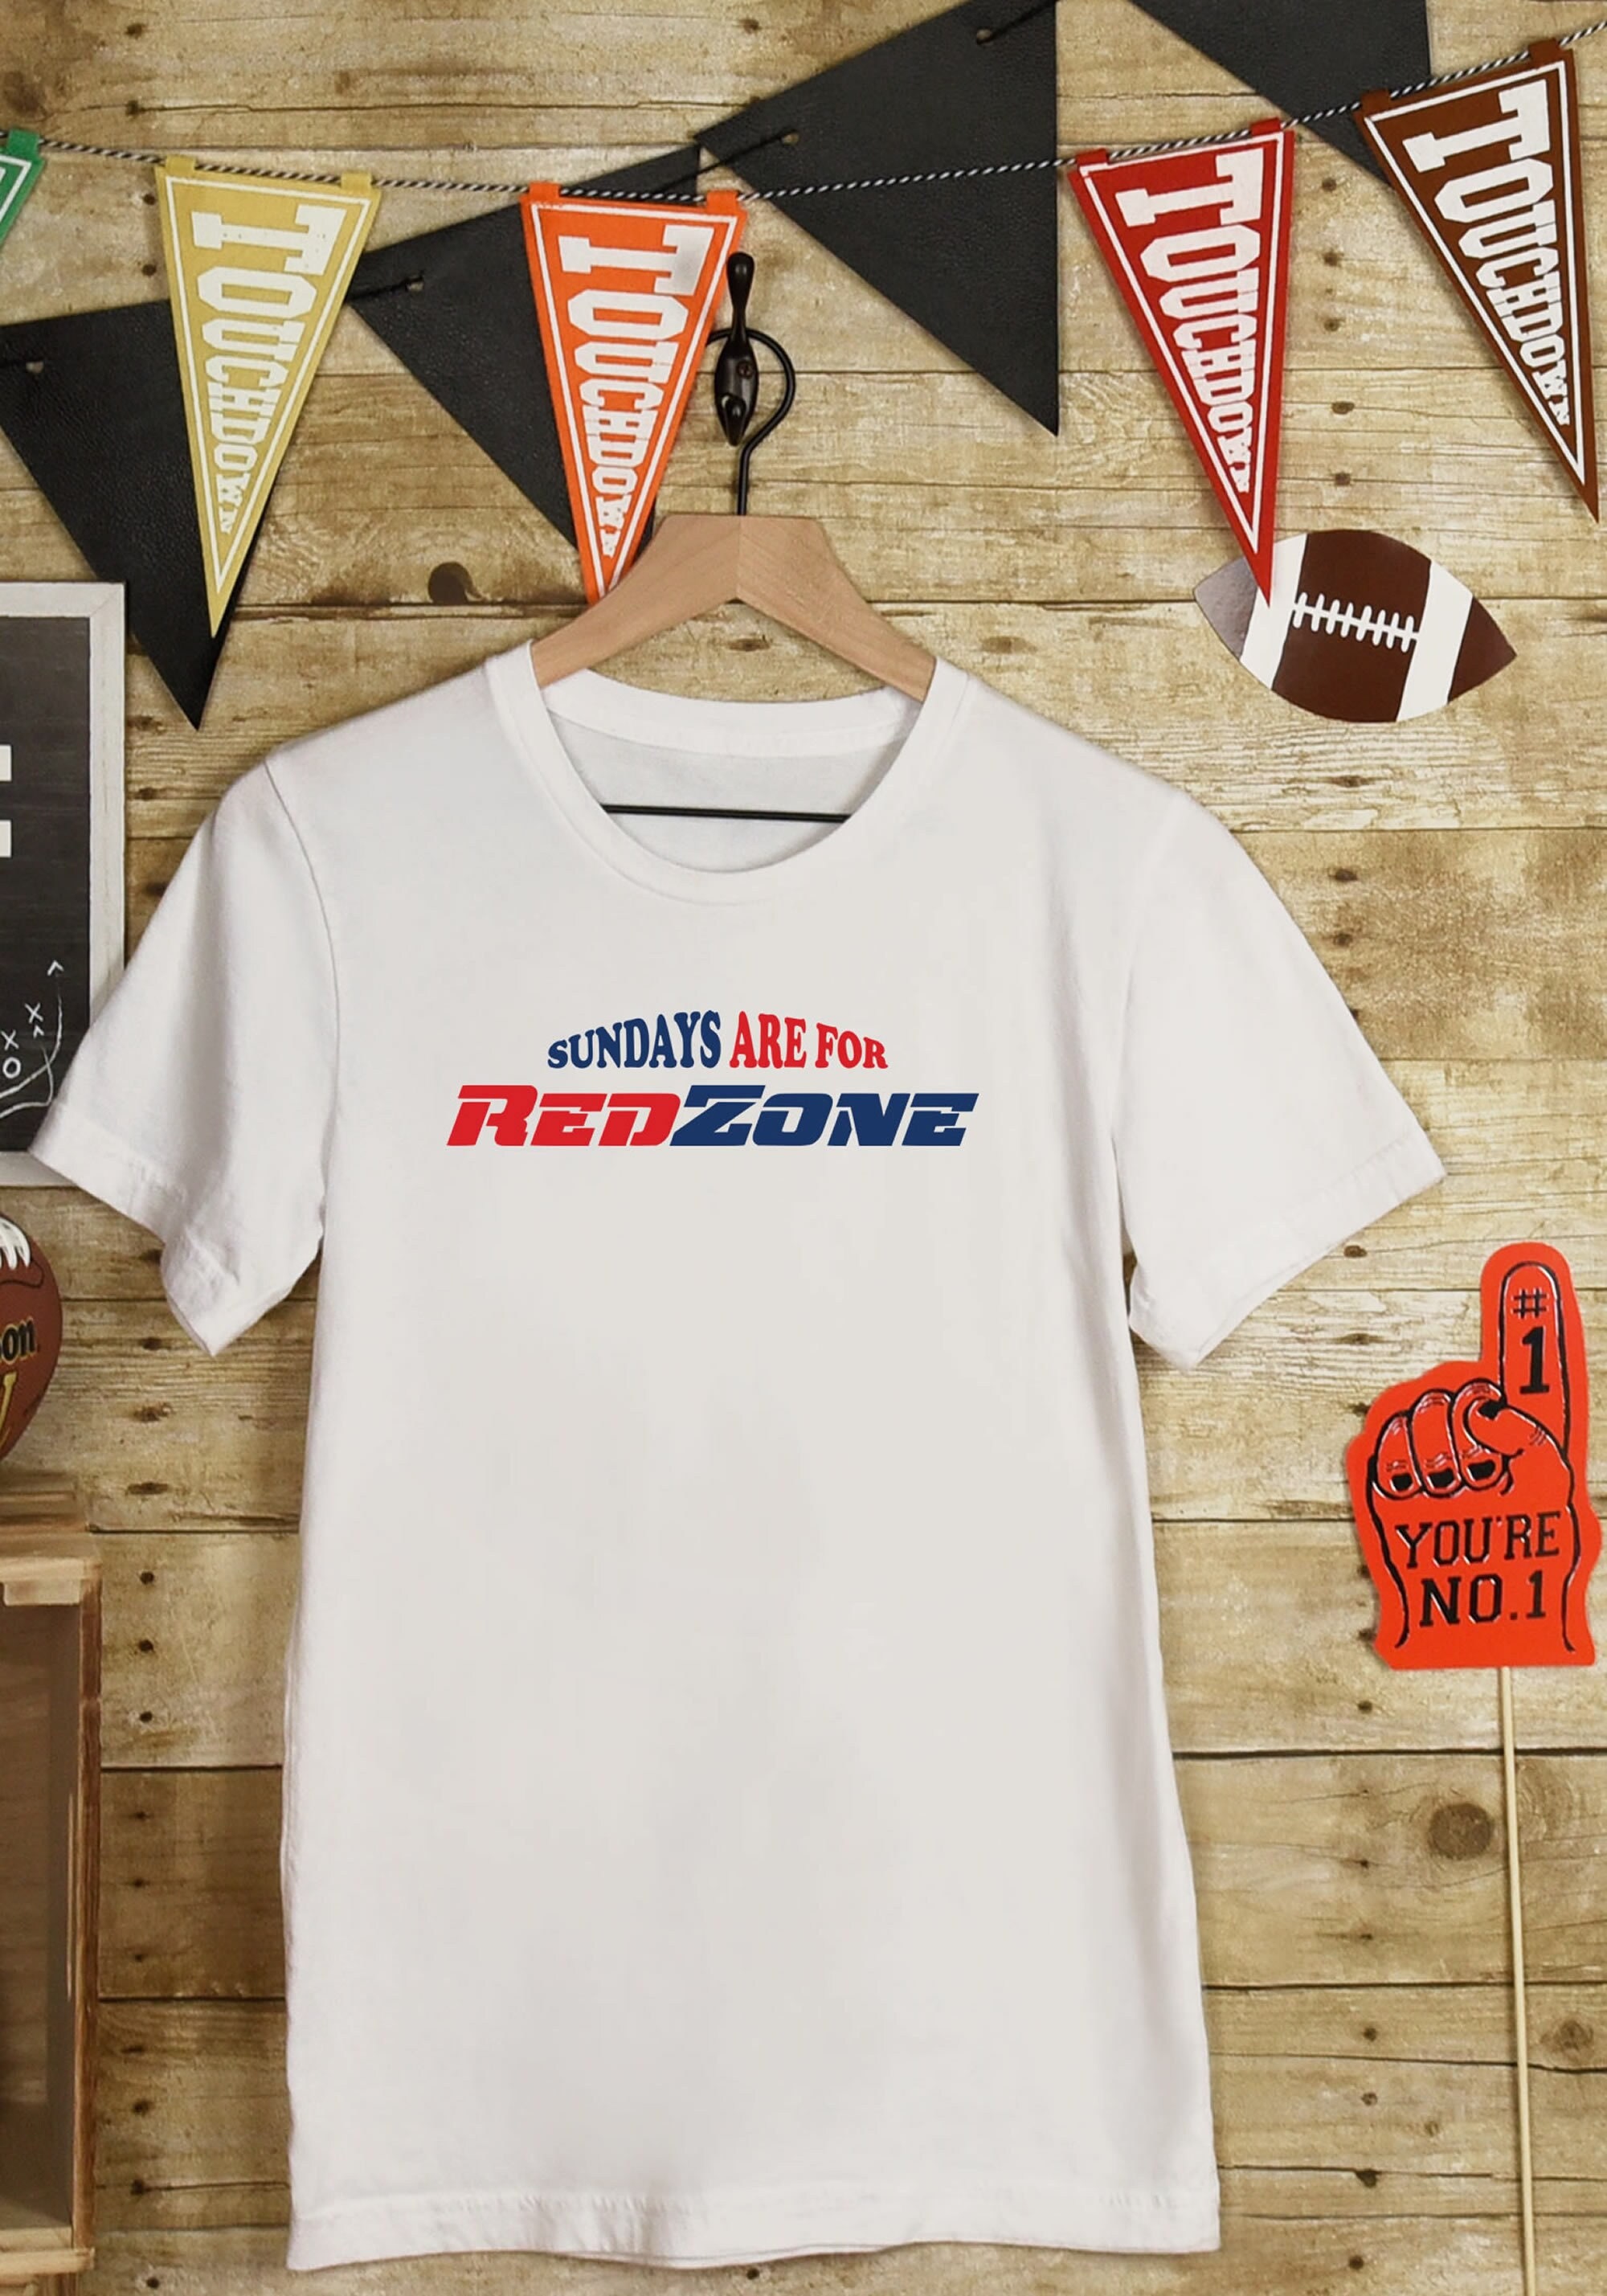 NFL RedZone T-Shirts Unisex Scott Hanson Inspire Uplift